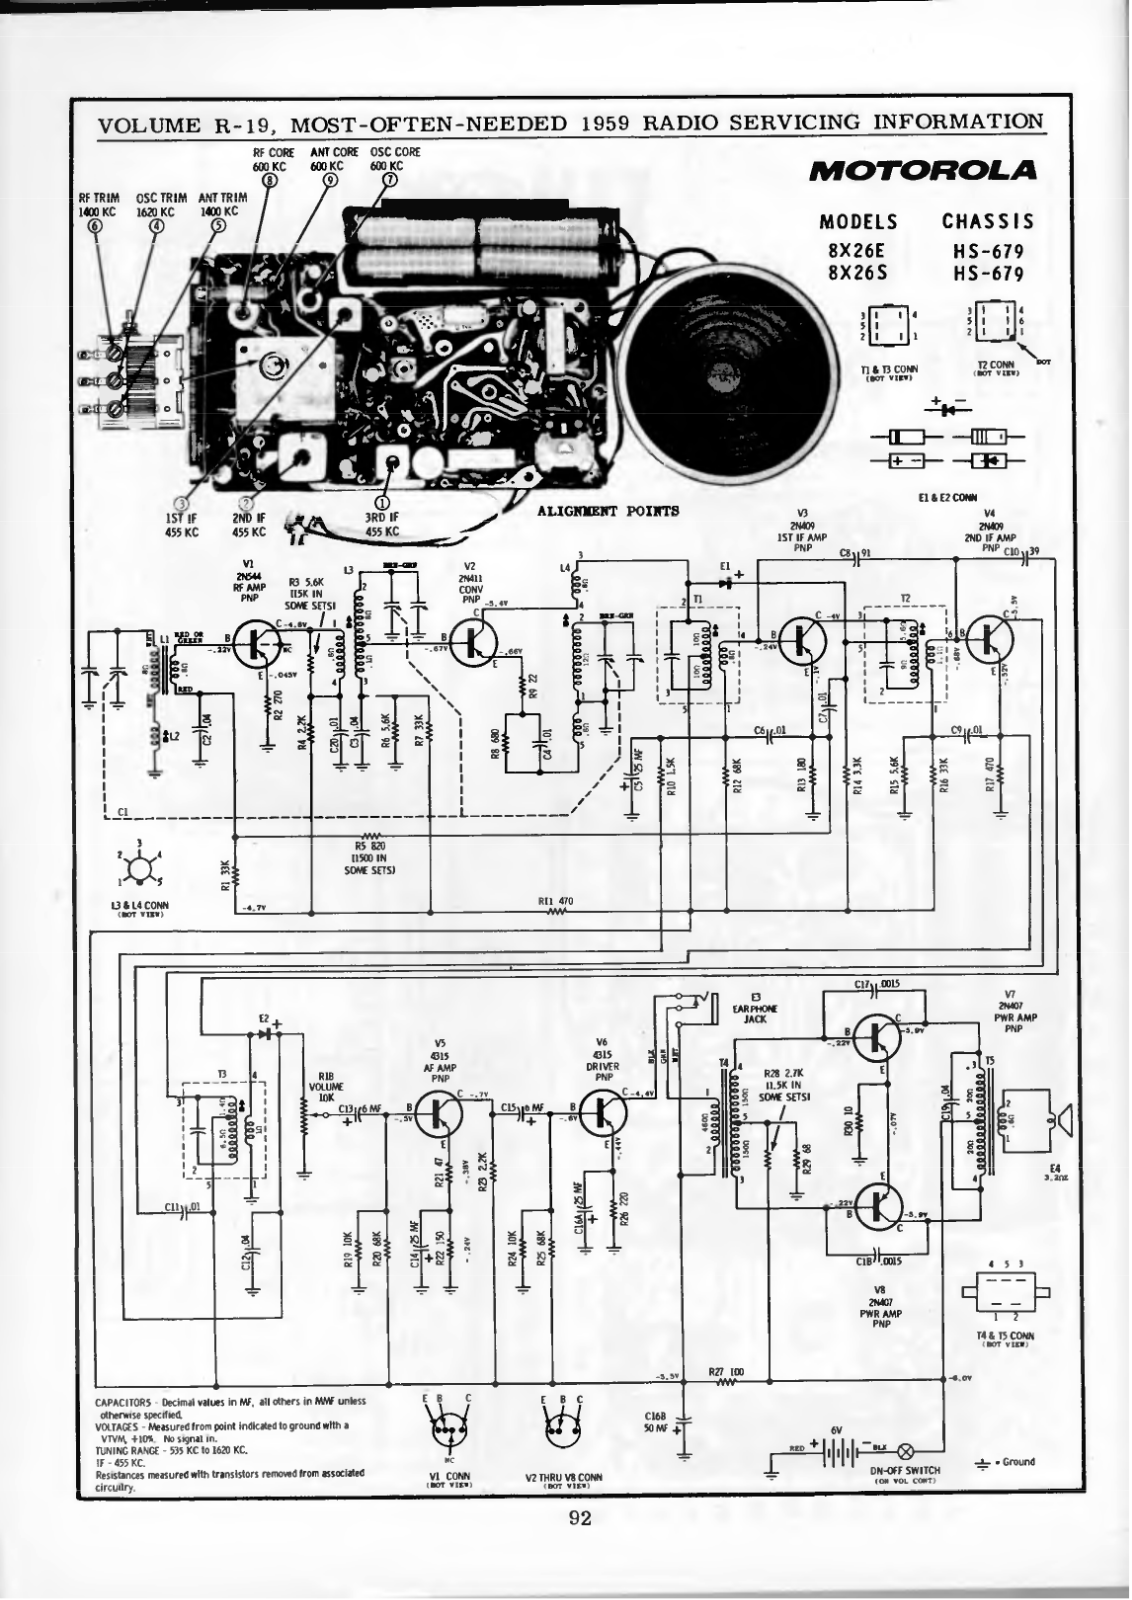 Motorola 8X26E-S Schematic